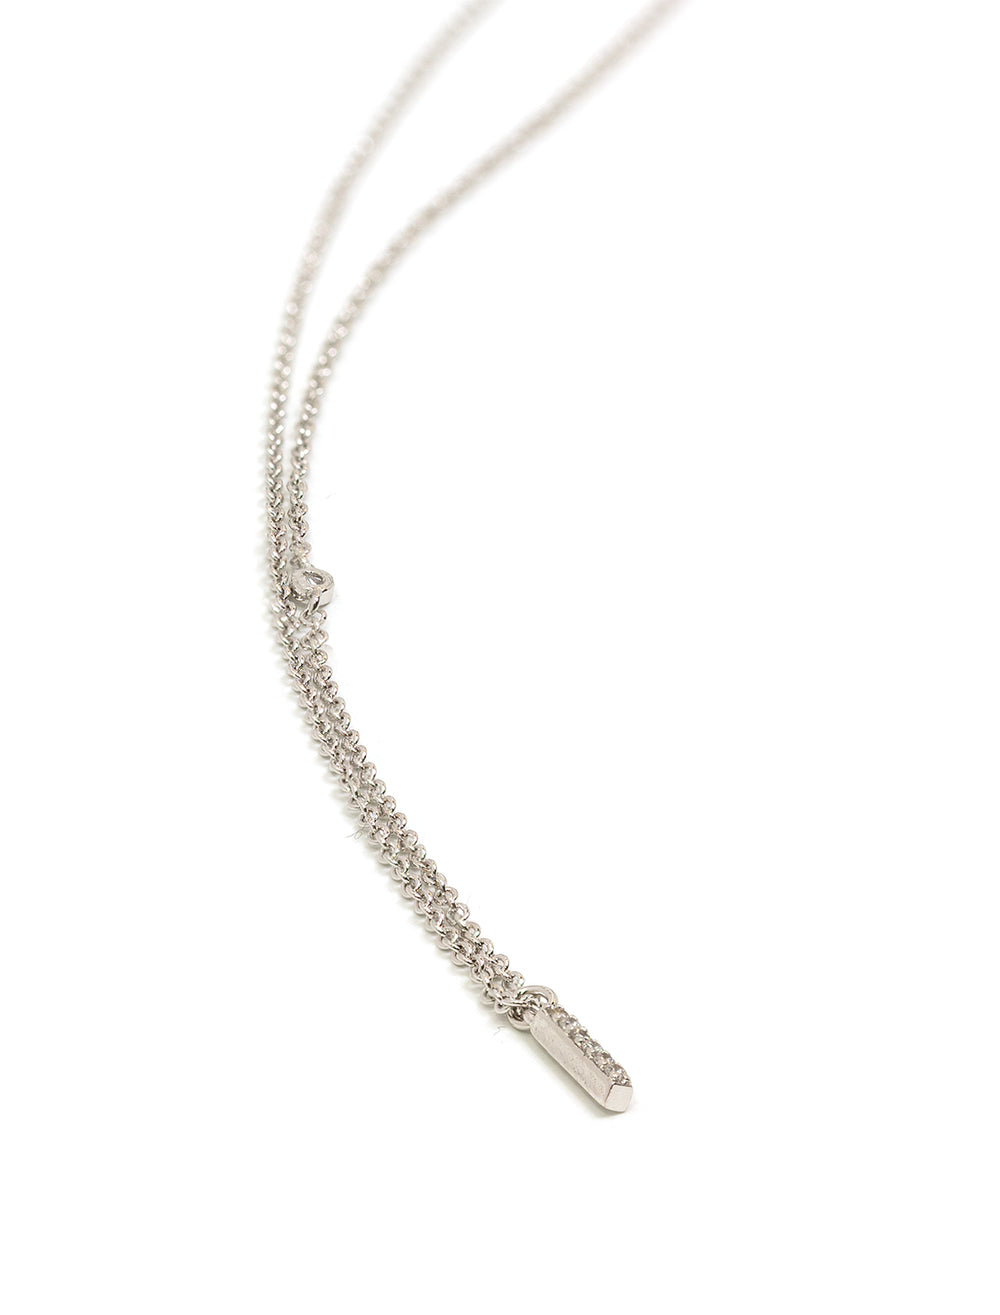 Stylized laydown of Tai Jewelry's Silver Chain Necklace with CZ Stick and Offset CZ.